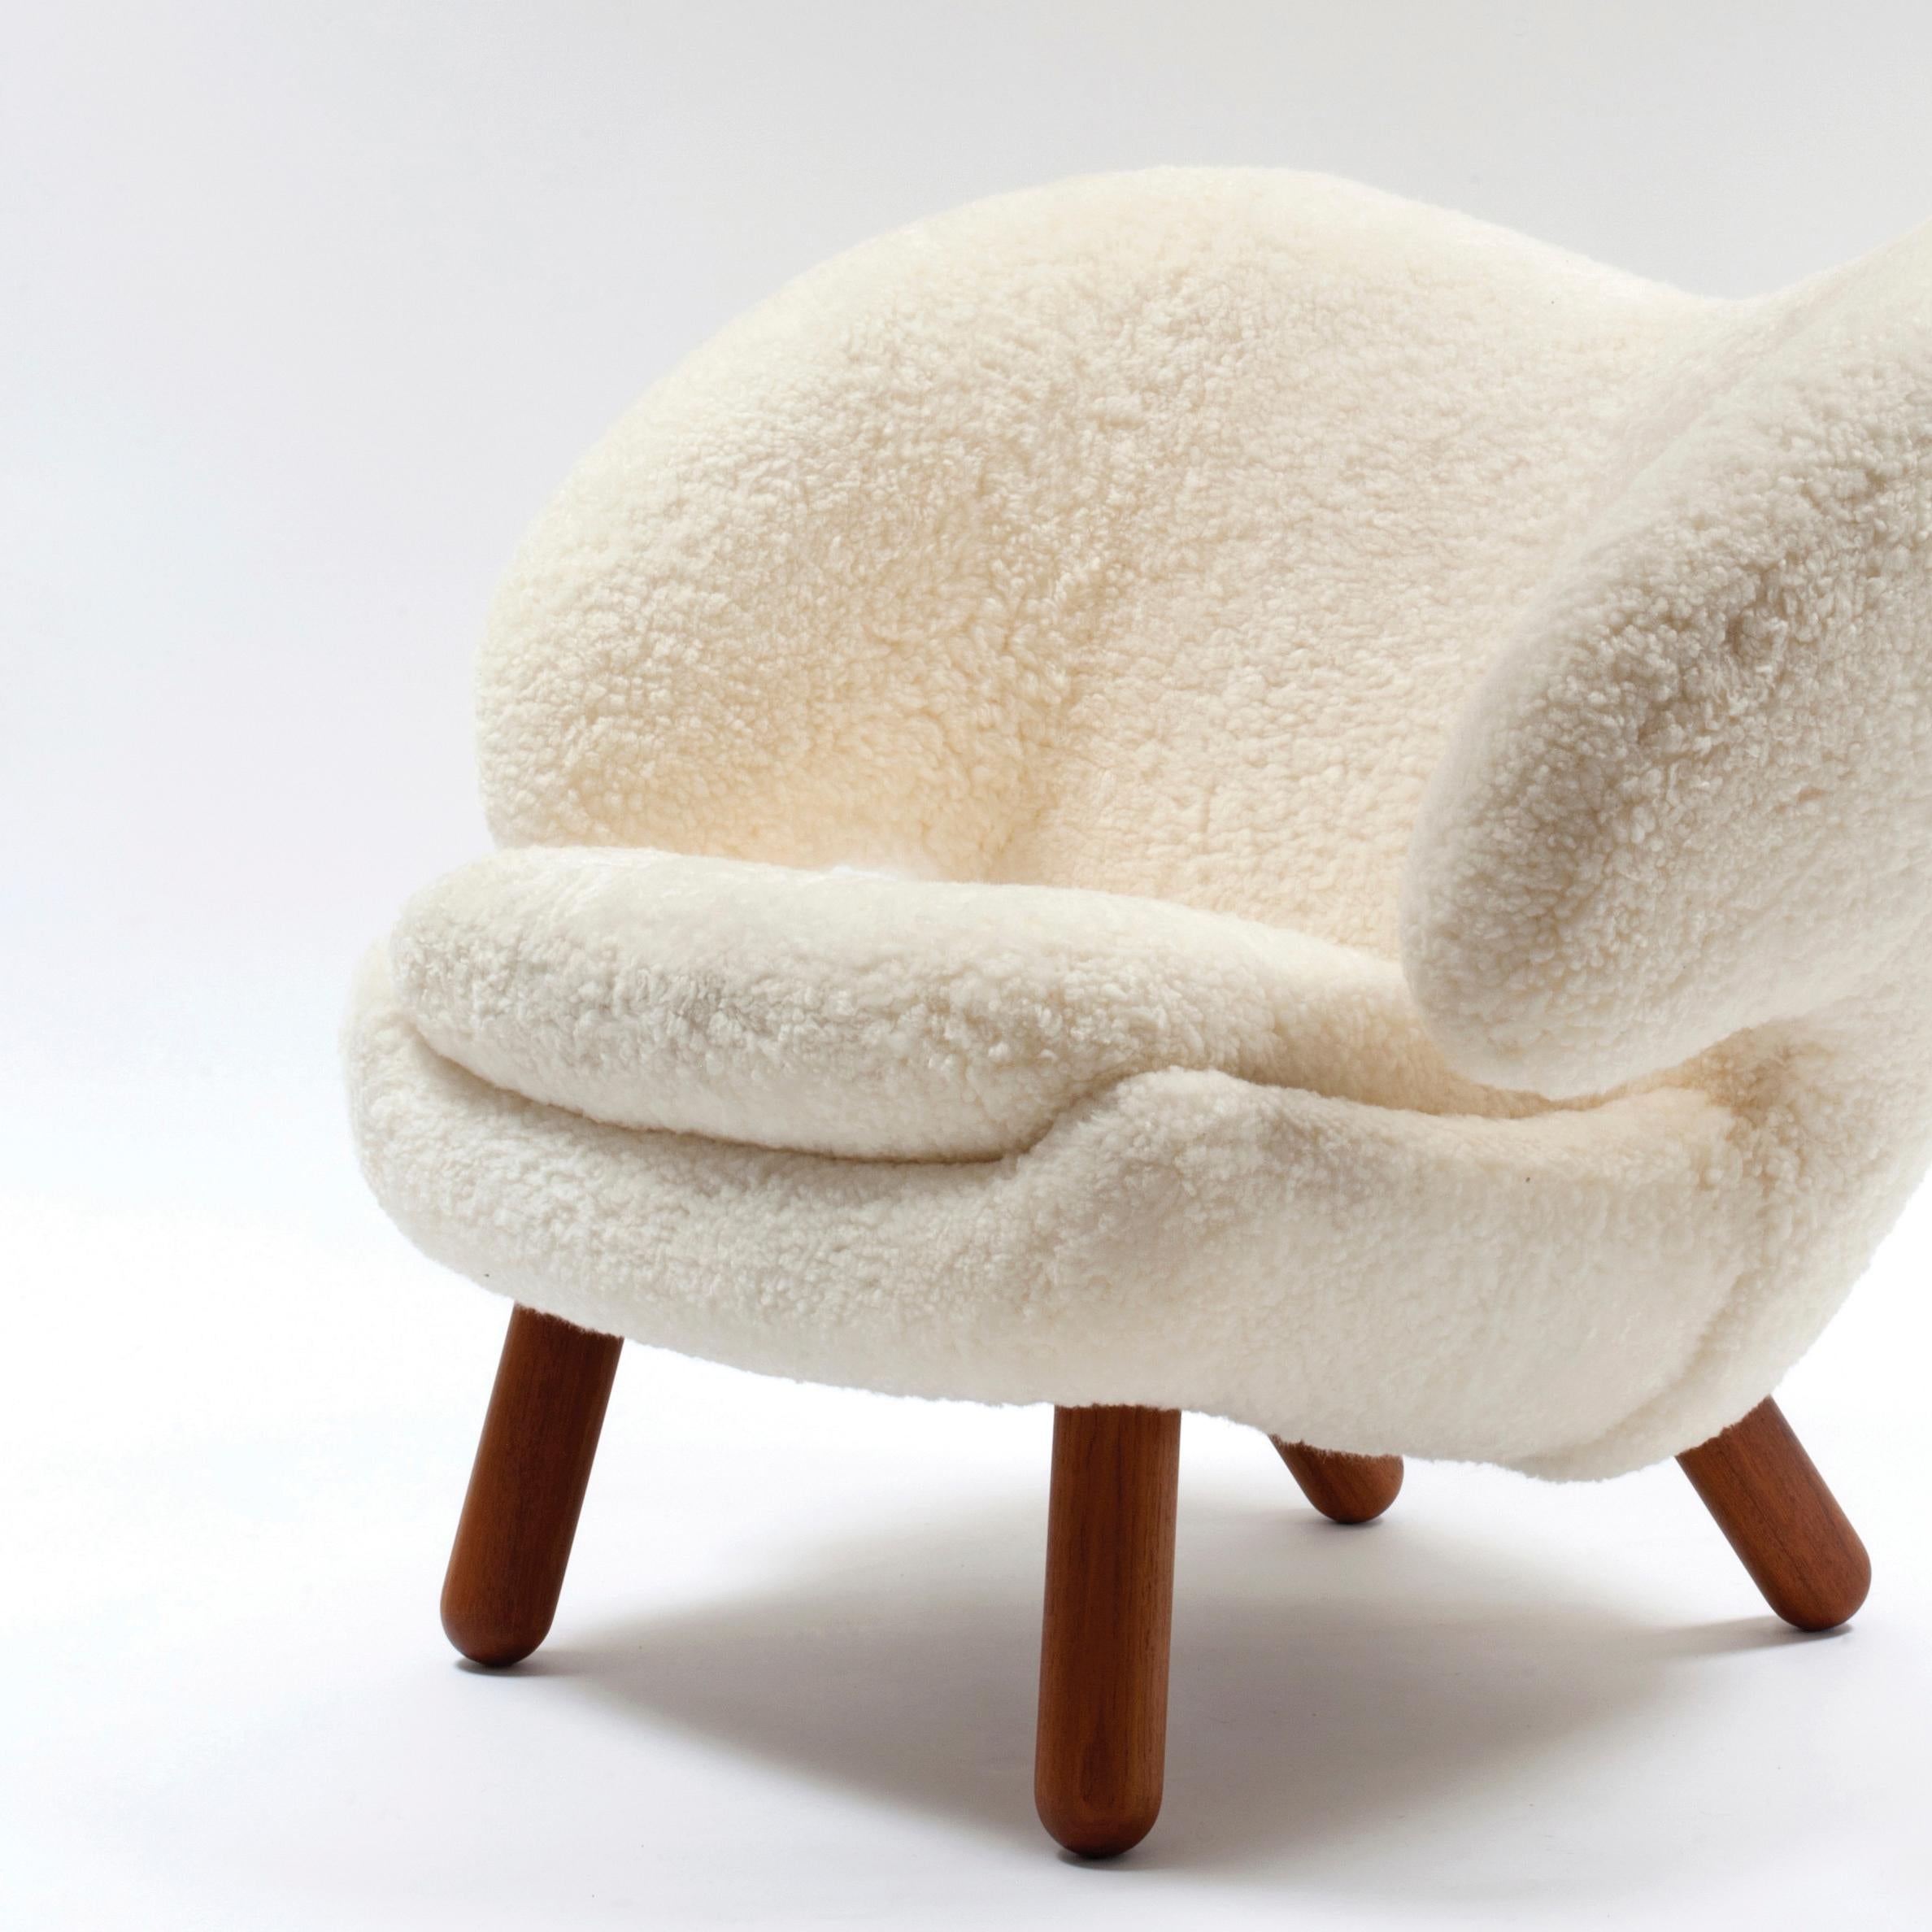 Modern Finn Juhl Pelican Chair Skandilock Sheep Offwhite and Wood For Sale